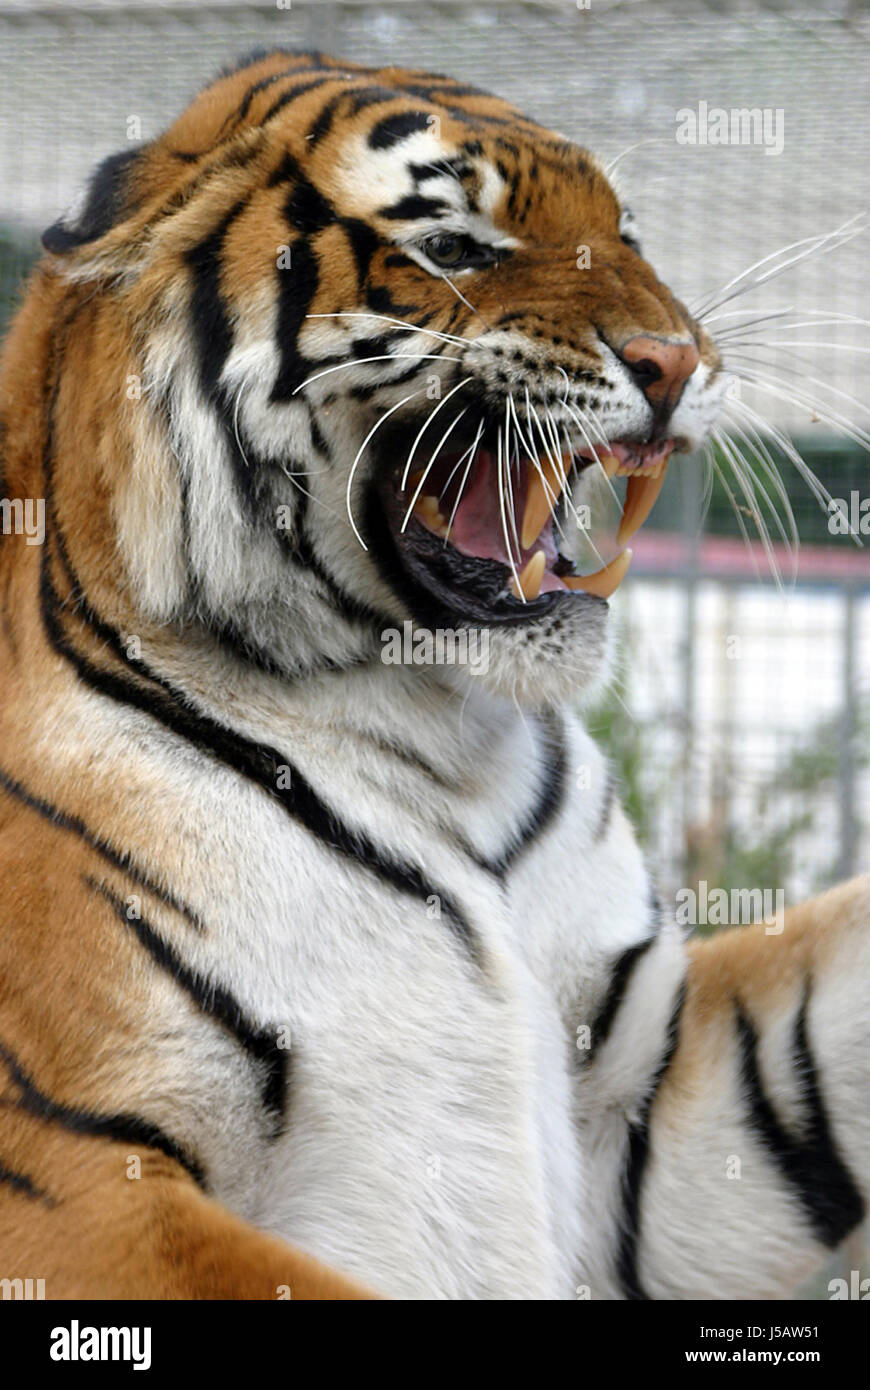 tiger 0001 Stock Photo